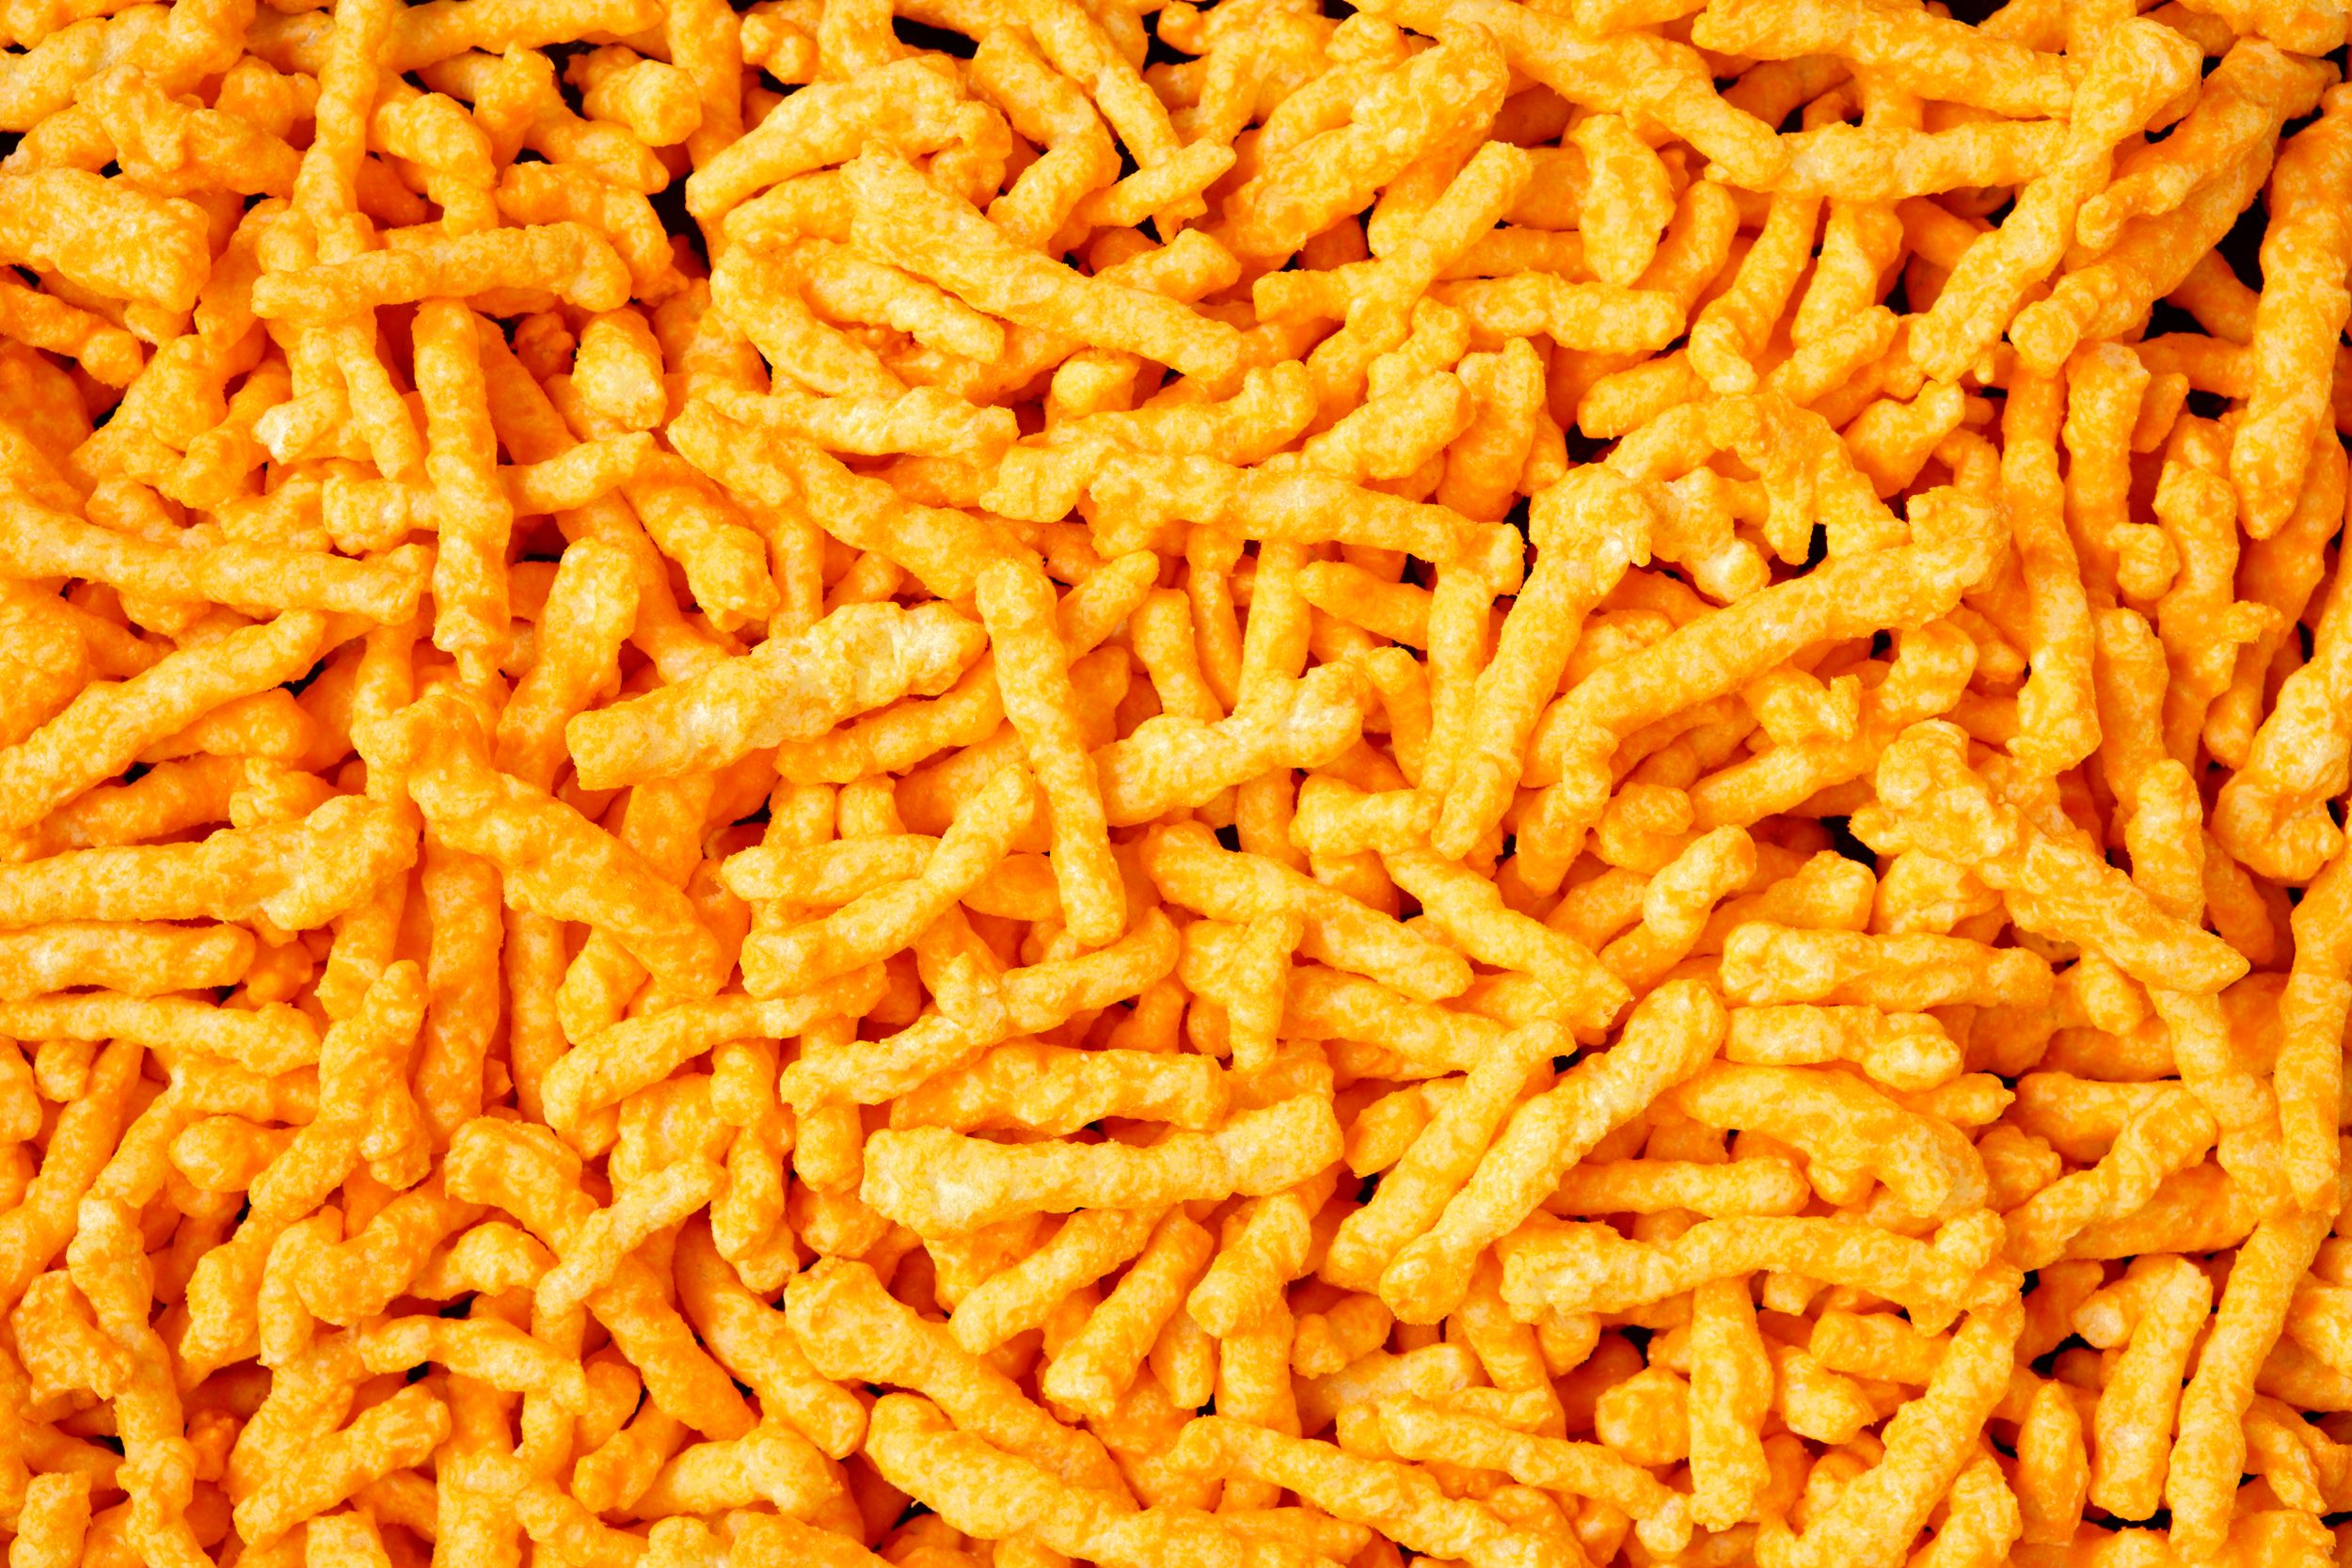 Cheetos Wallpaper Backgrounds 62674 2500x1667px.